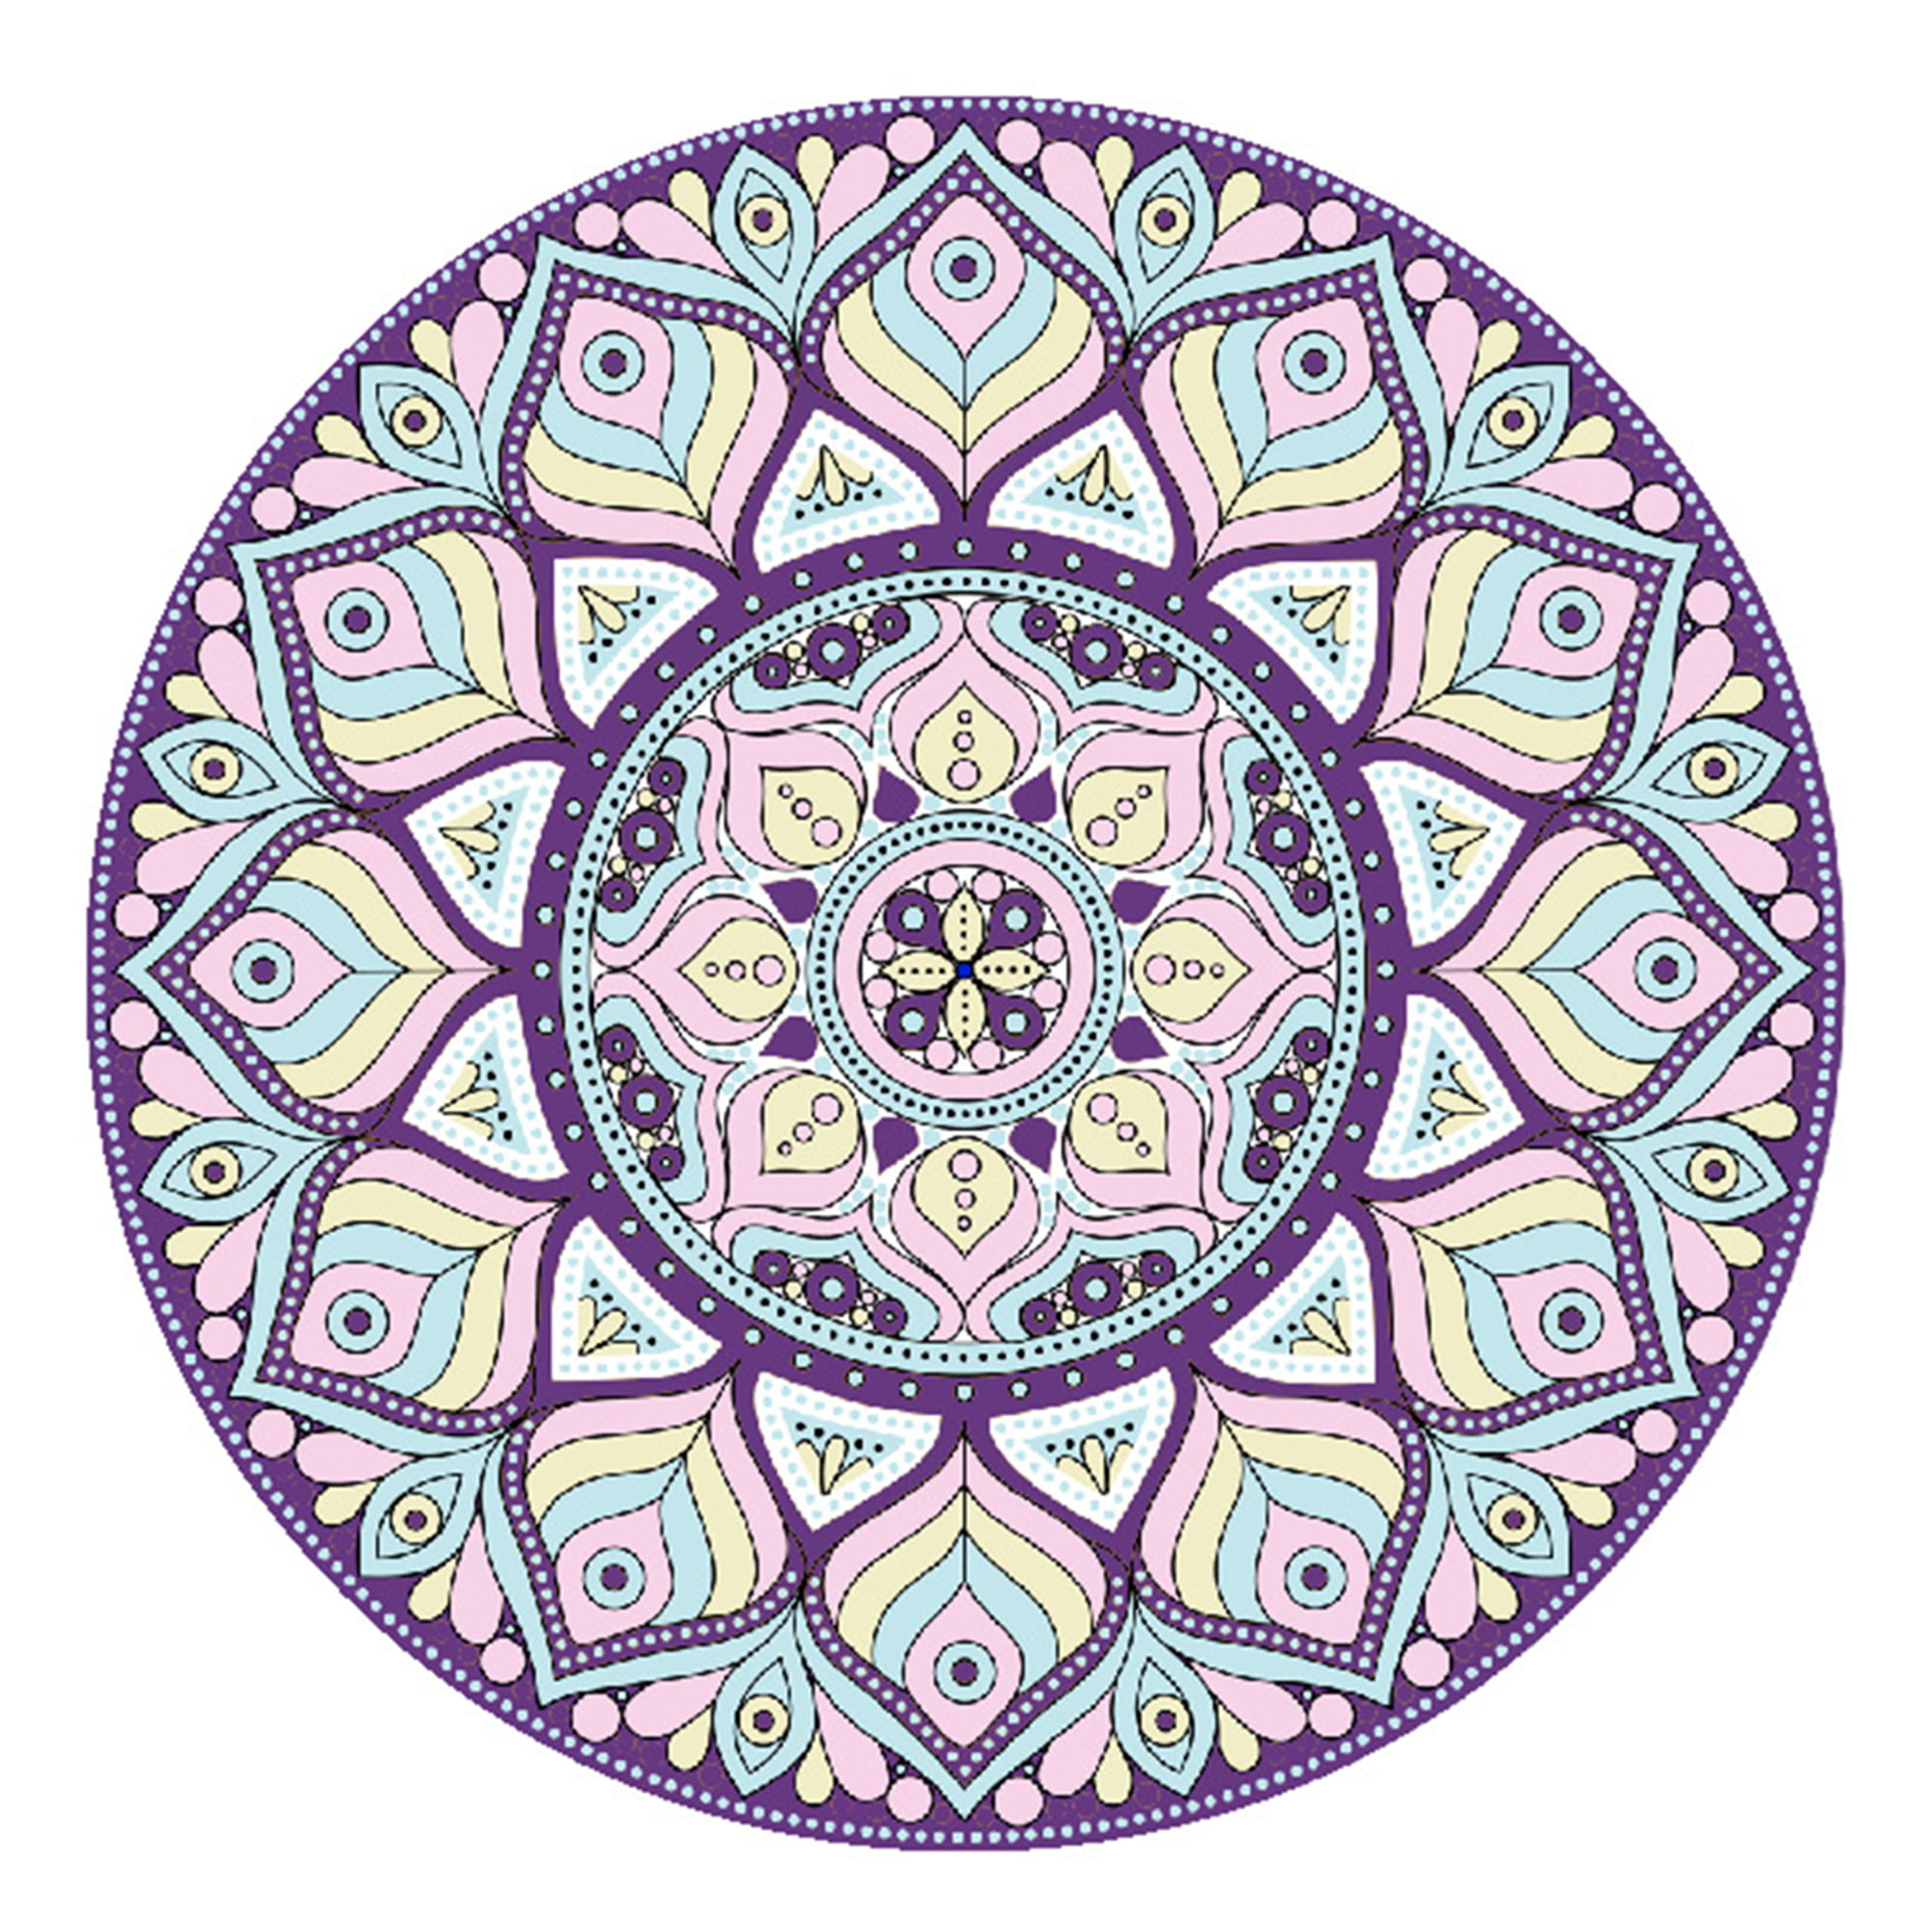 Boho Mandala Tapestry Hippie Shawl Round Beach Yoga Mat Lotus Blanket Decoration 